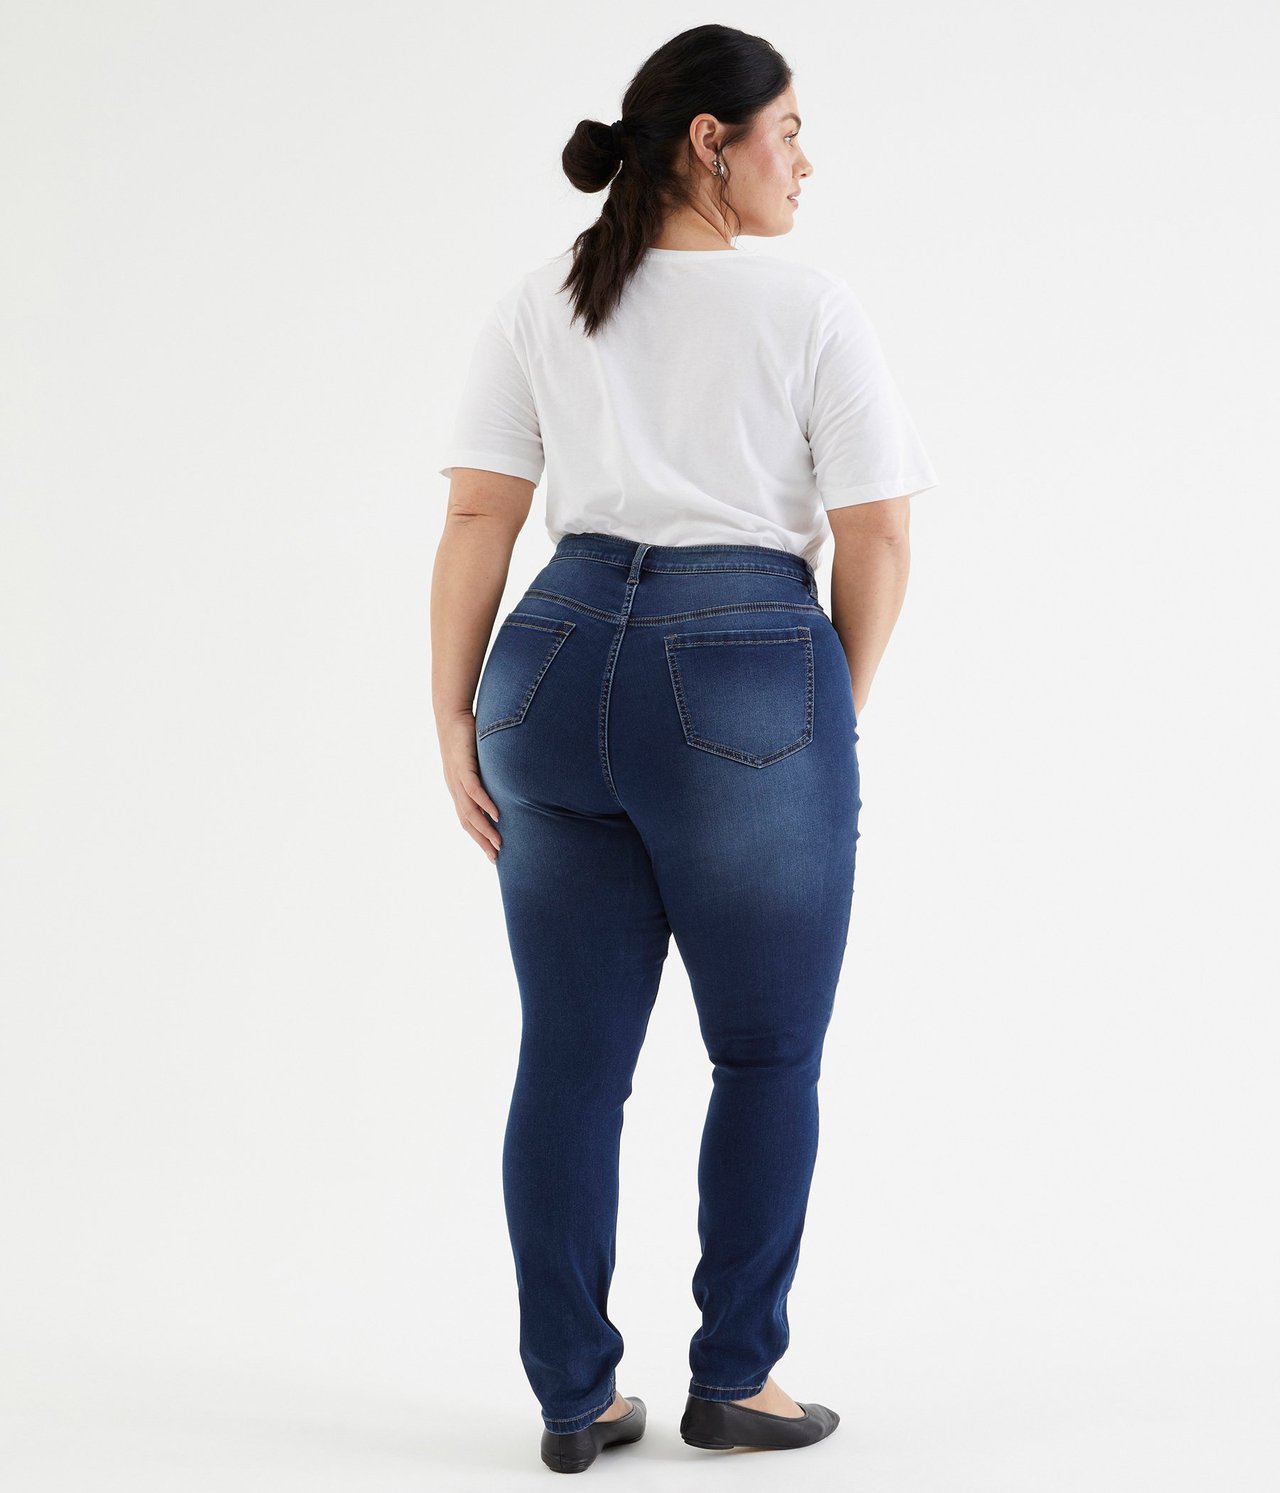 Ebba slim jeans extra long leg Tumma denimi - null - 0